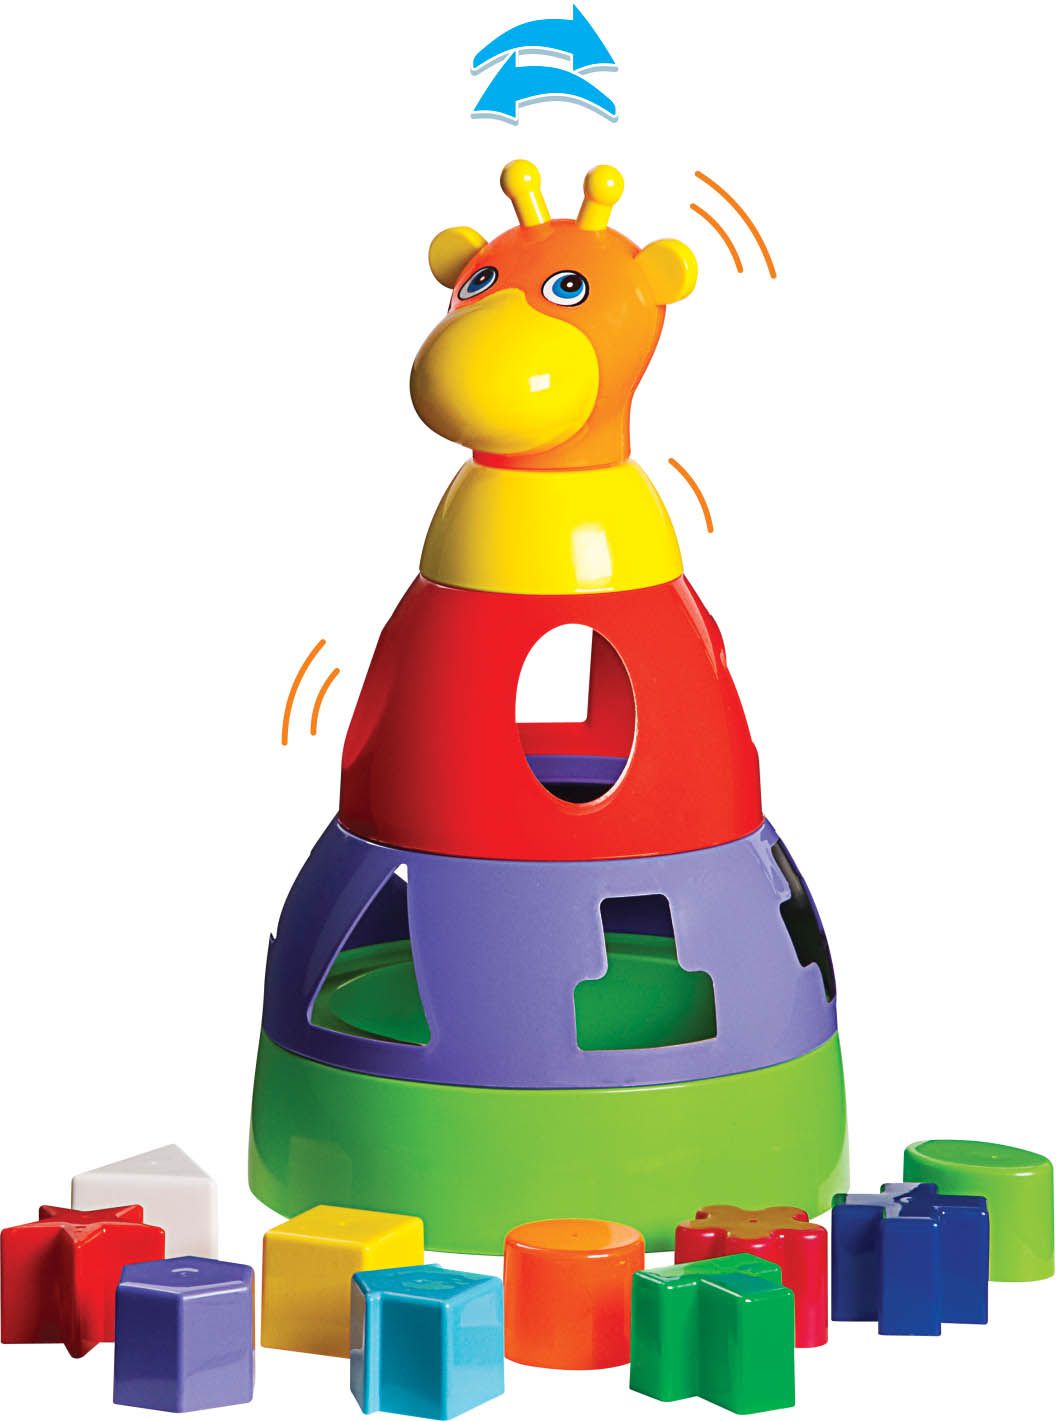 Kit de Brinquedos Educativos Girafa + Cubo + Bola